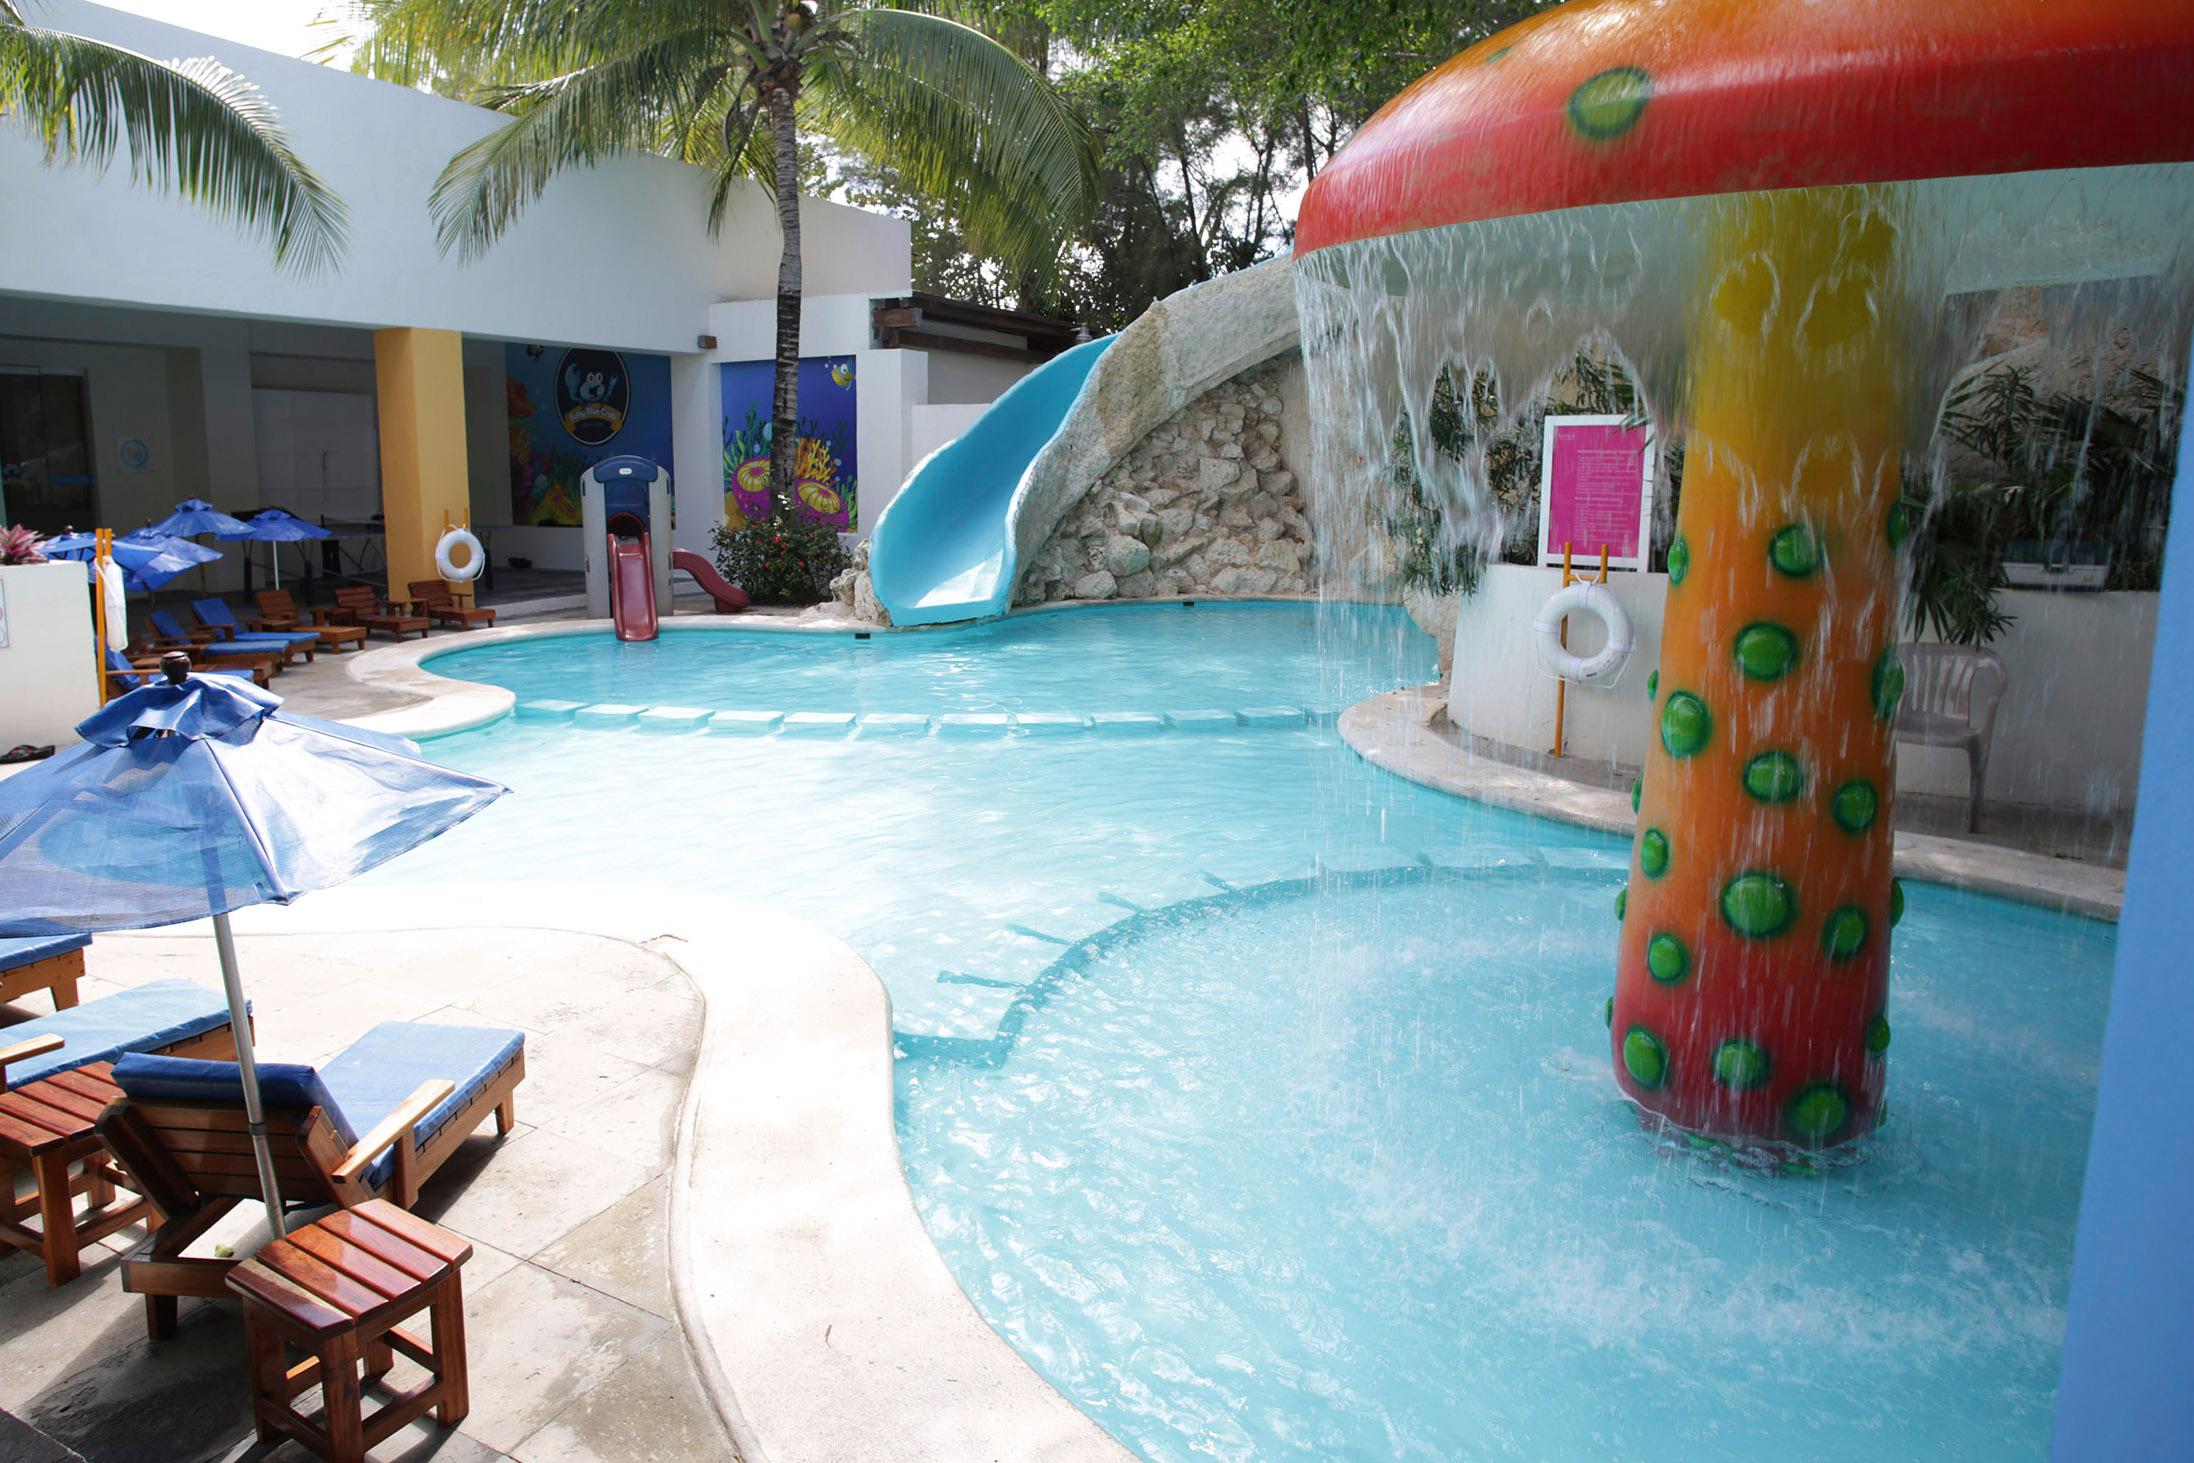 Oasis Palm Resort